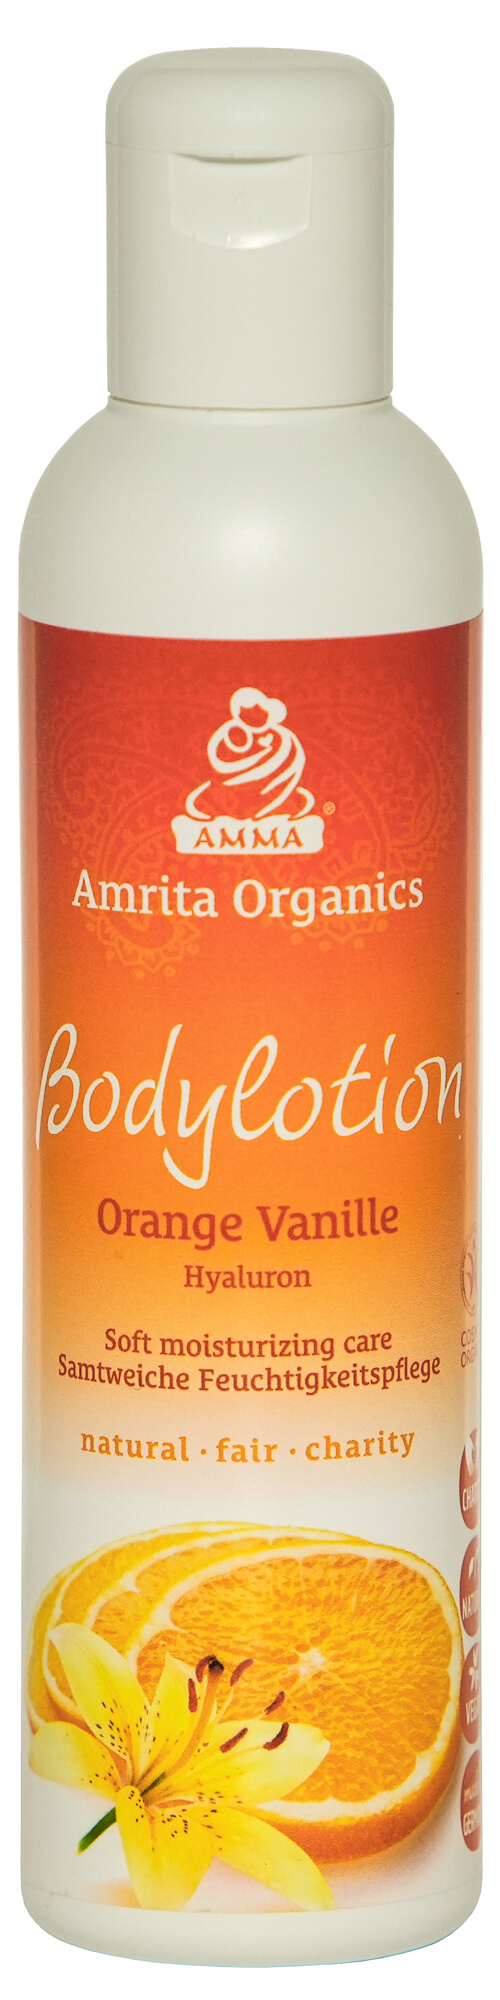  Bodylotion Orange-Vanille with hyaluron